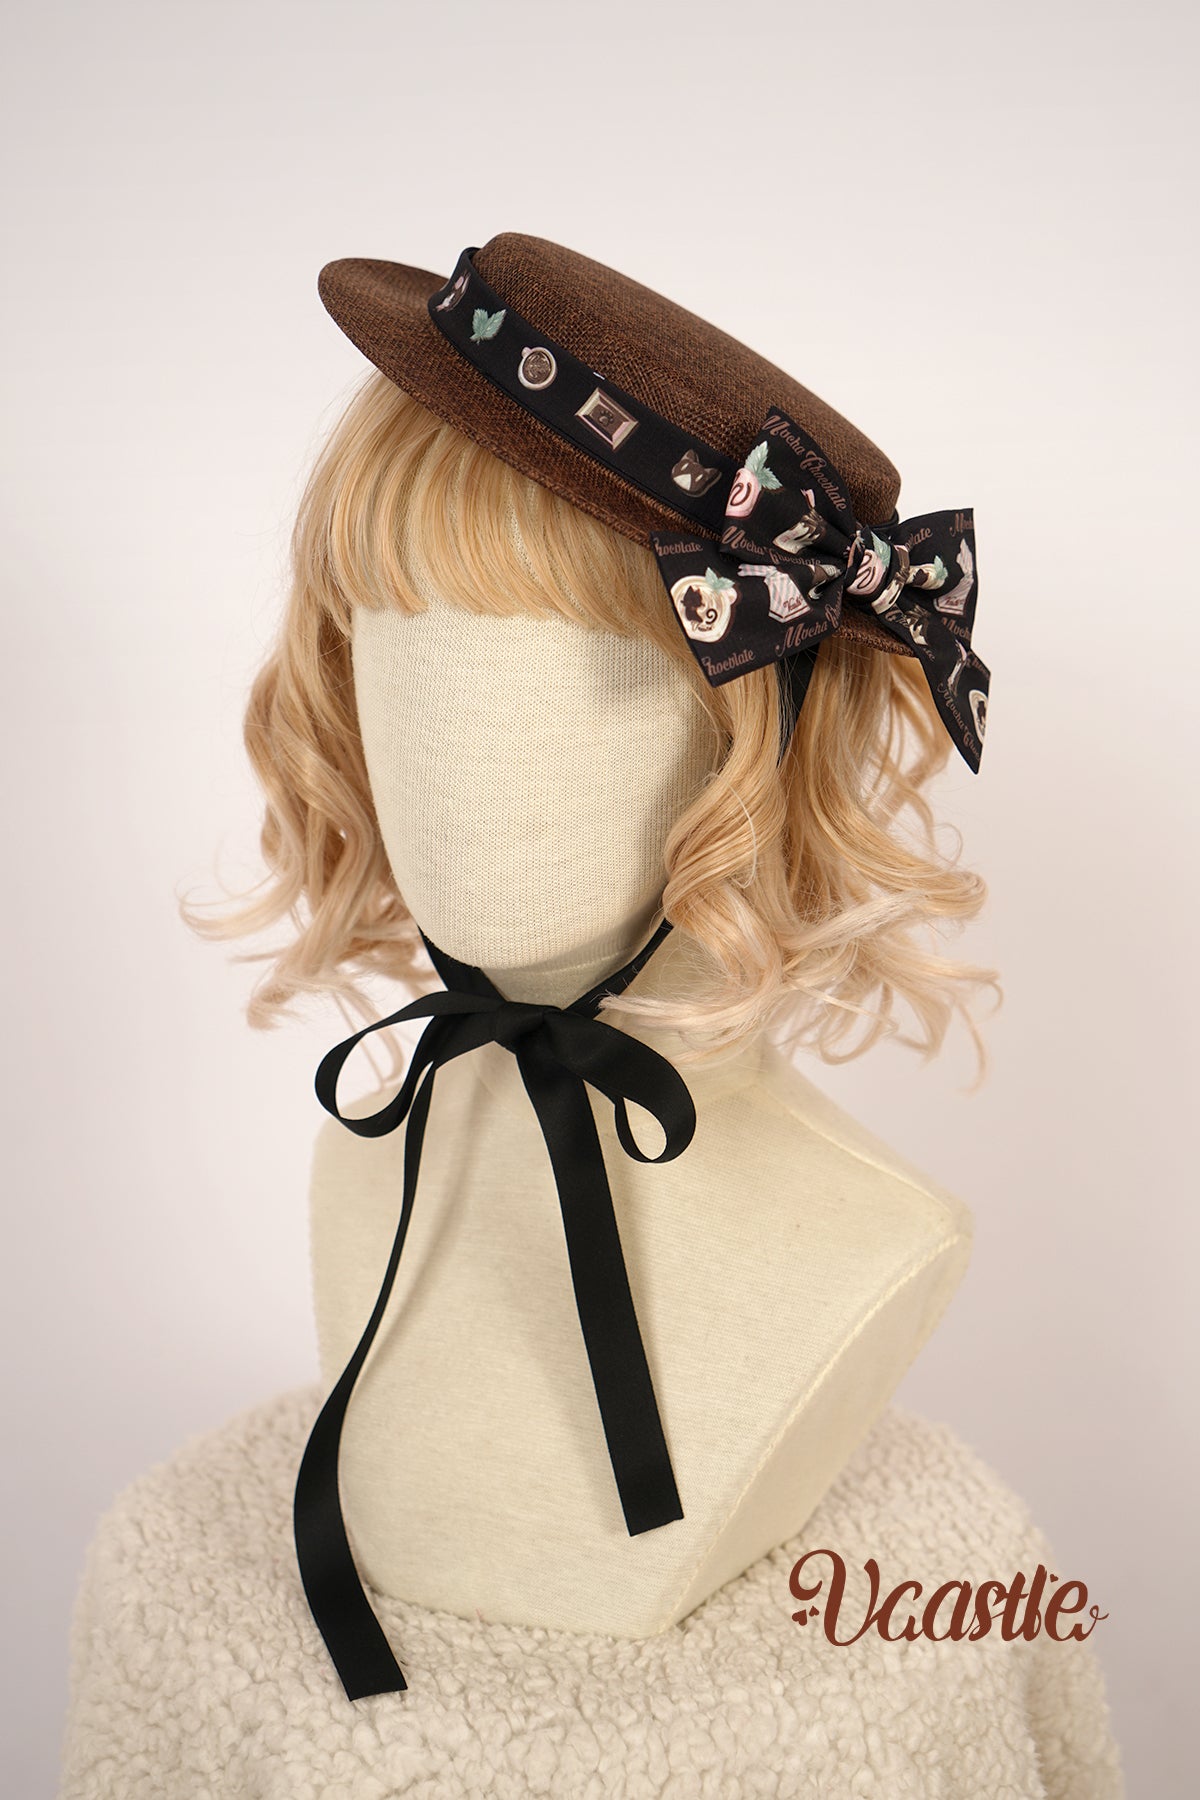 Vcastle~Mocha Chocolate~Kawaii Lolita Accessory Multicolors black flat cap  